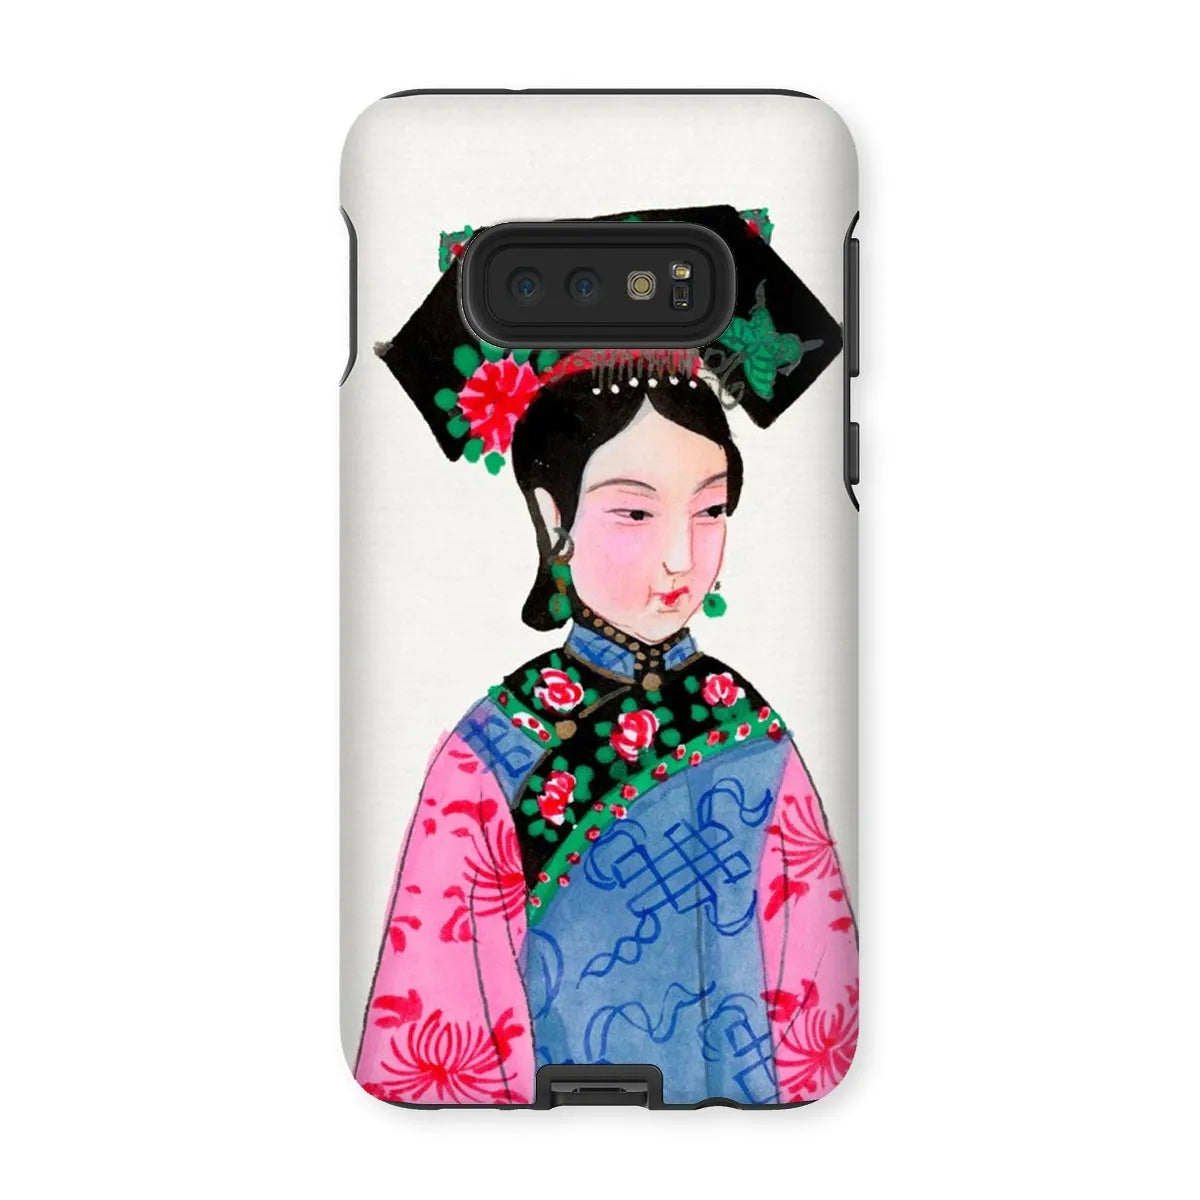 Noblewoman Too - Manchu Aesthetic Art Phone Case - Samsung Galaxy S10e / Matte - Mobile Phone Cases - Aesthetic Art